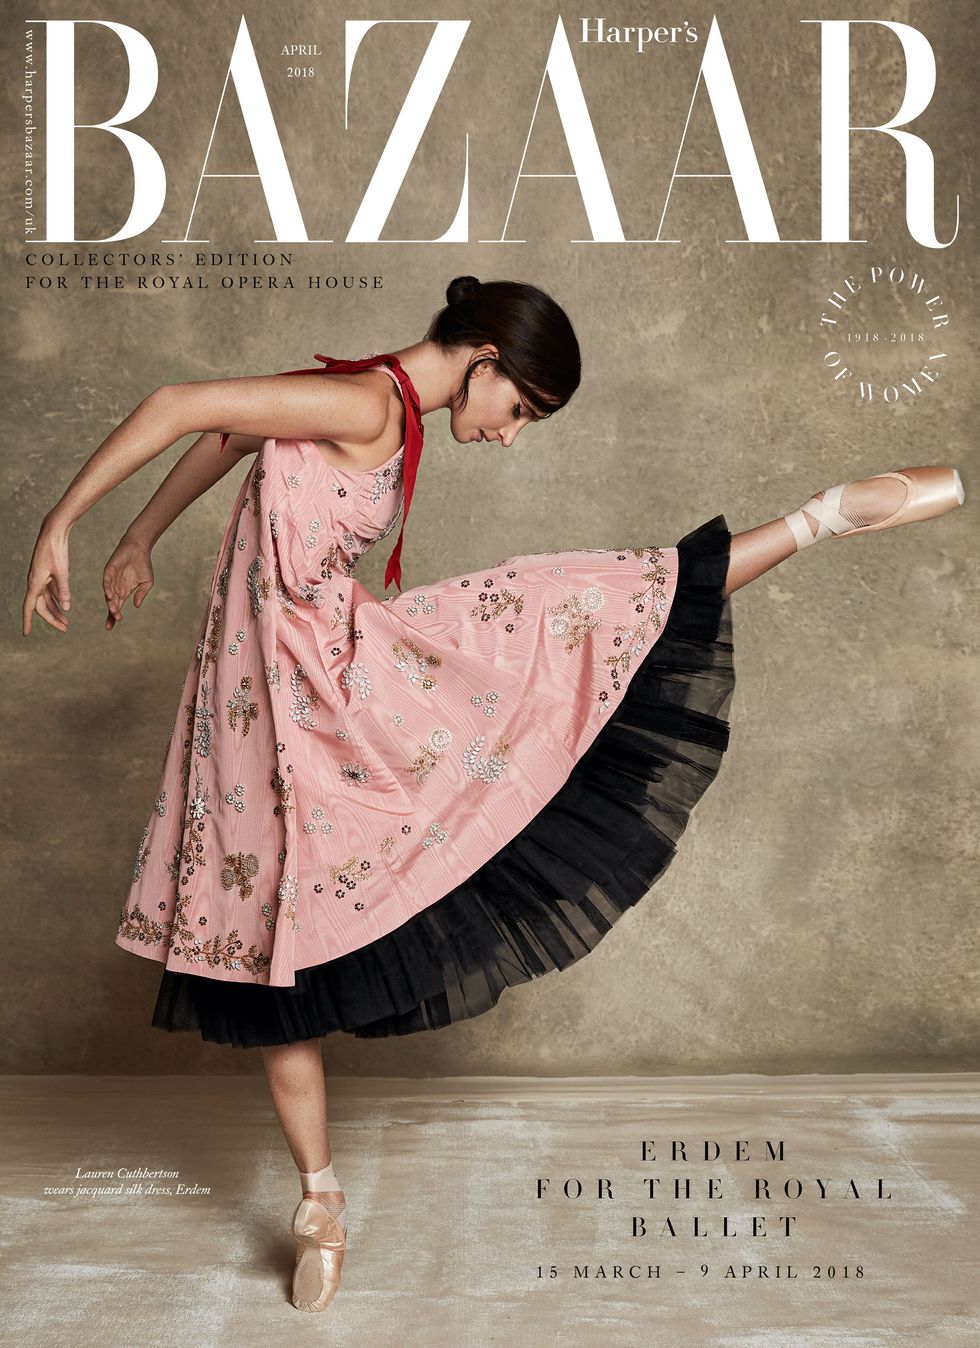 Royal Ballet principal dancer Lauren Cuthbertson wearing Erdem's designs for the Royal Ballet on the cover of Harper's Bazaar 